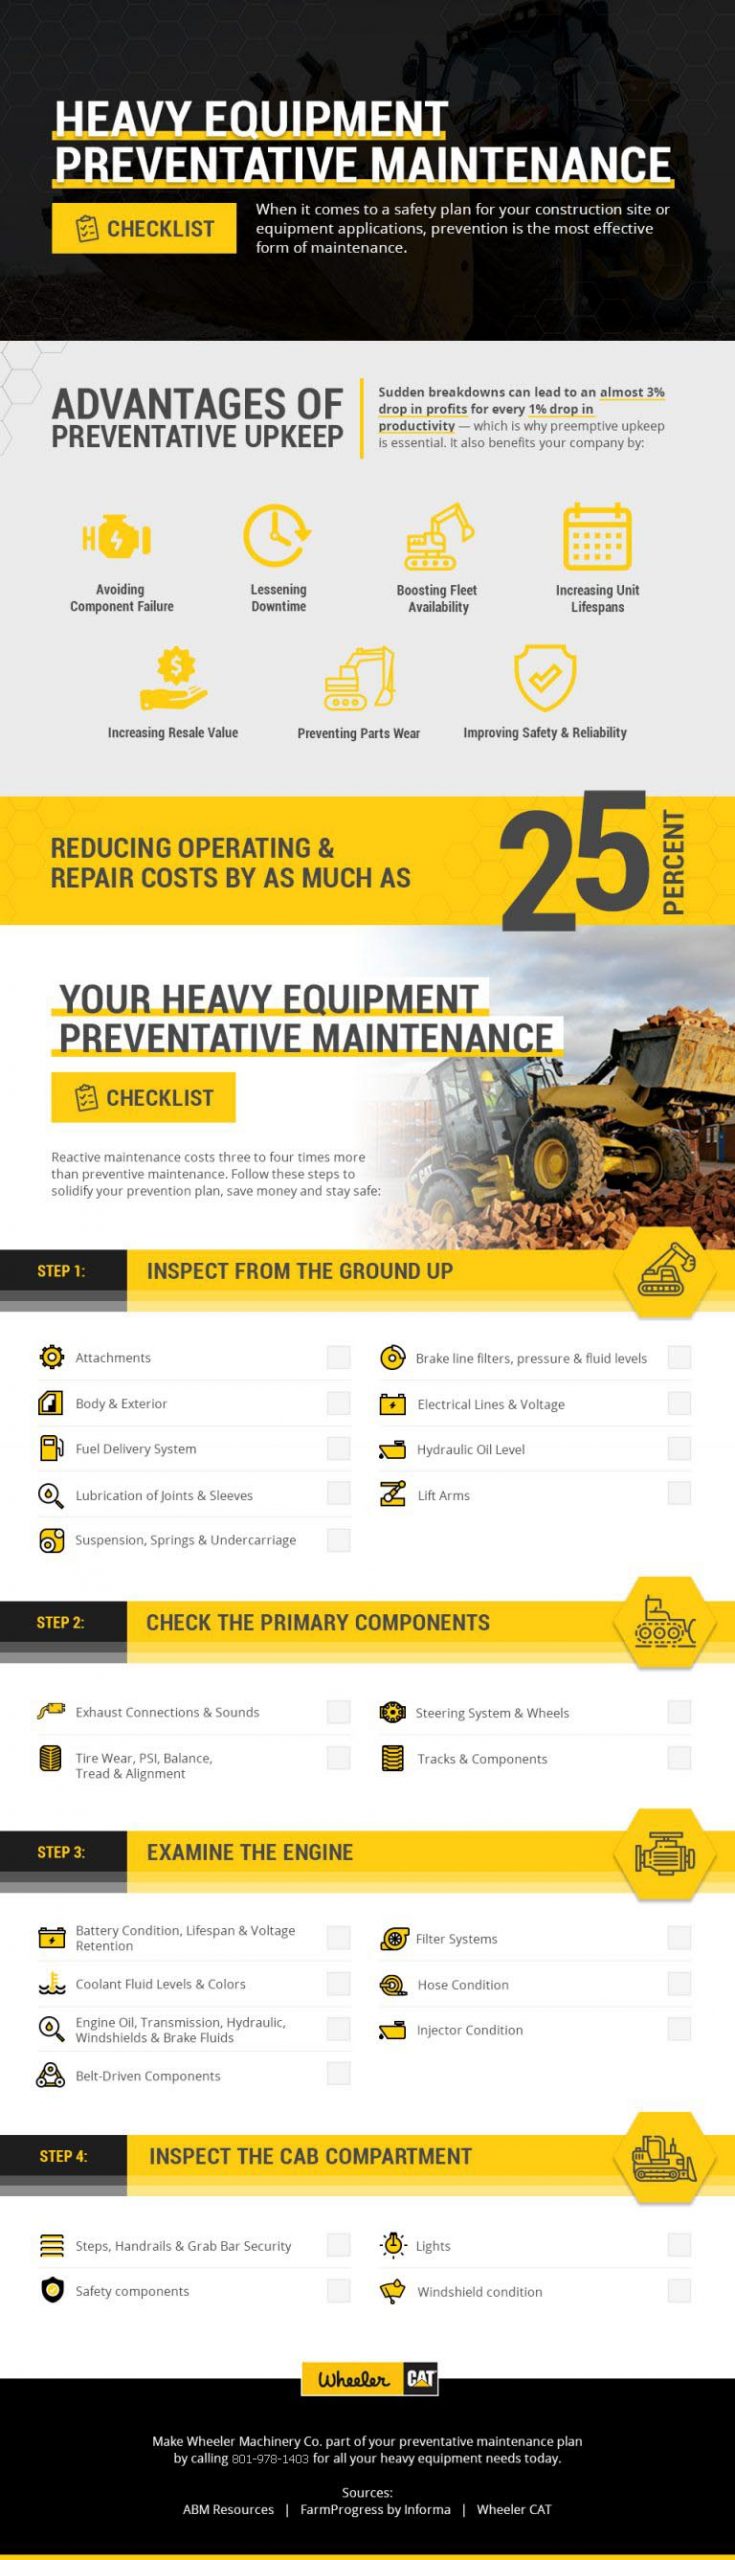 Heavy Equipment Preventative Maintenance Checklist